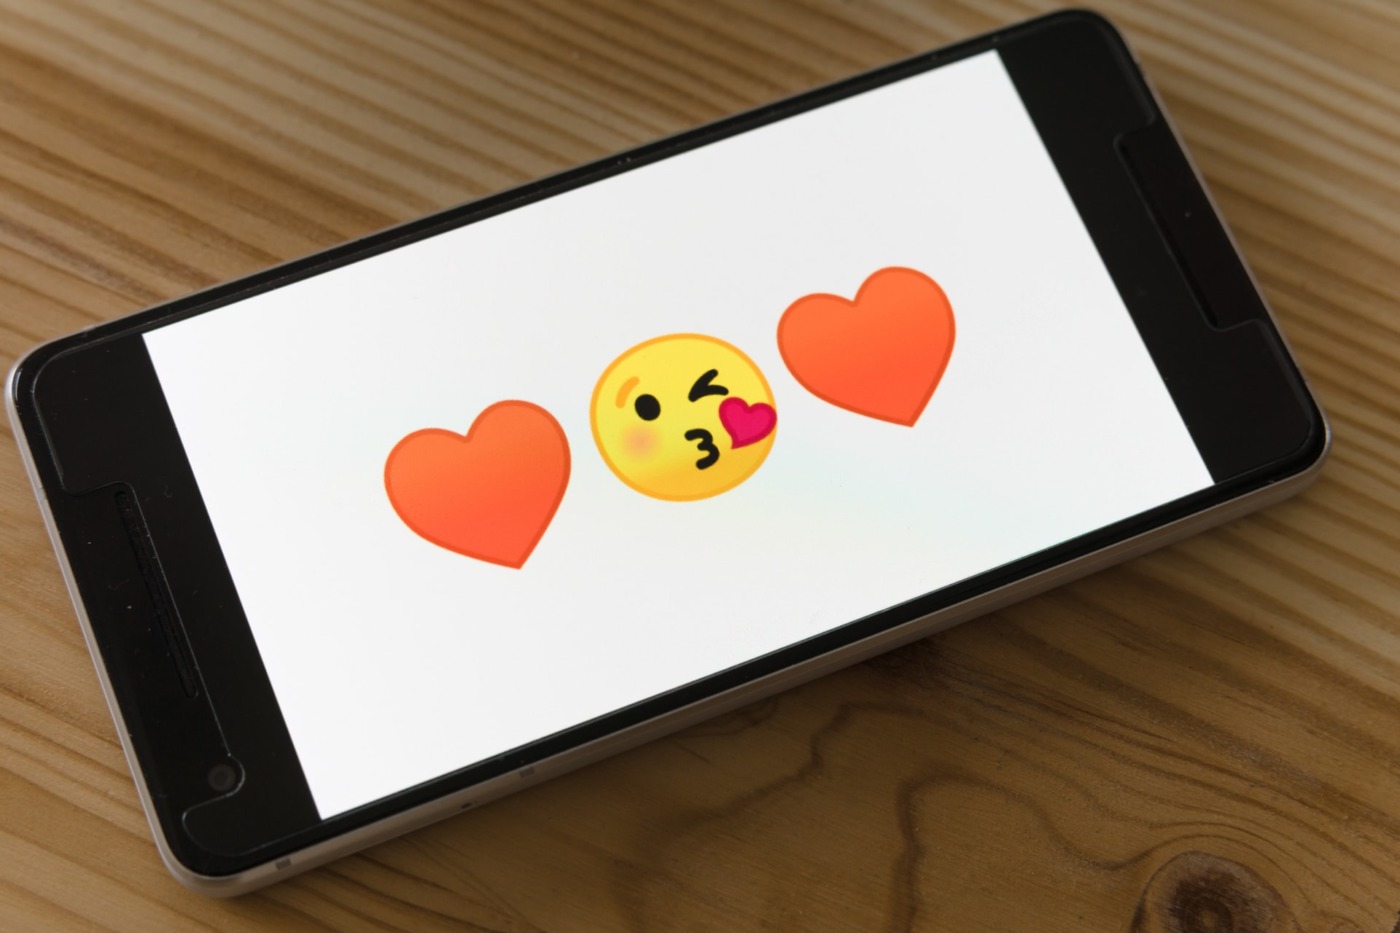 phone screen featuring love heart emojis